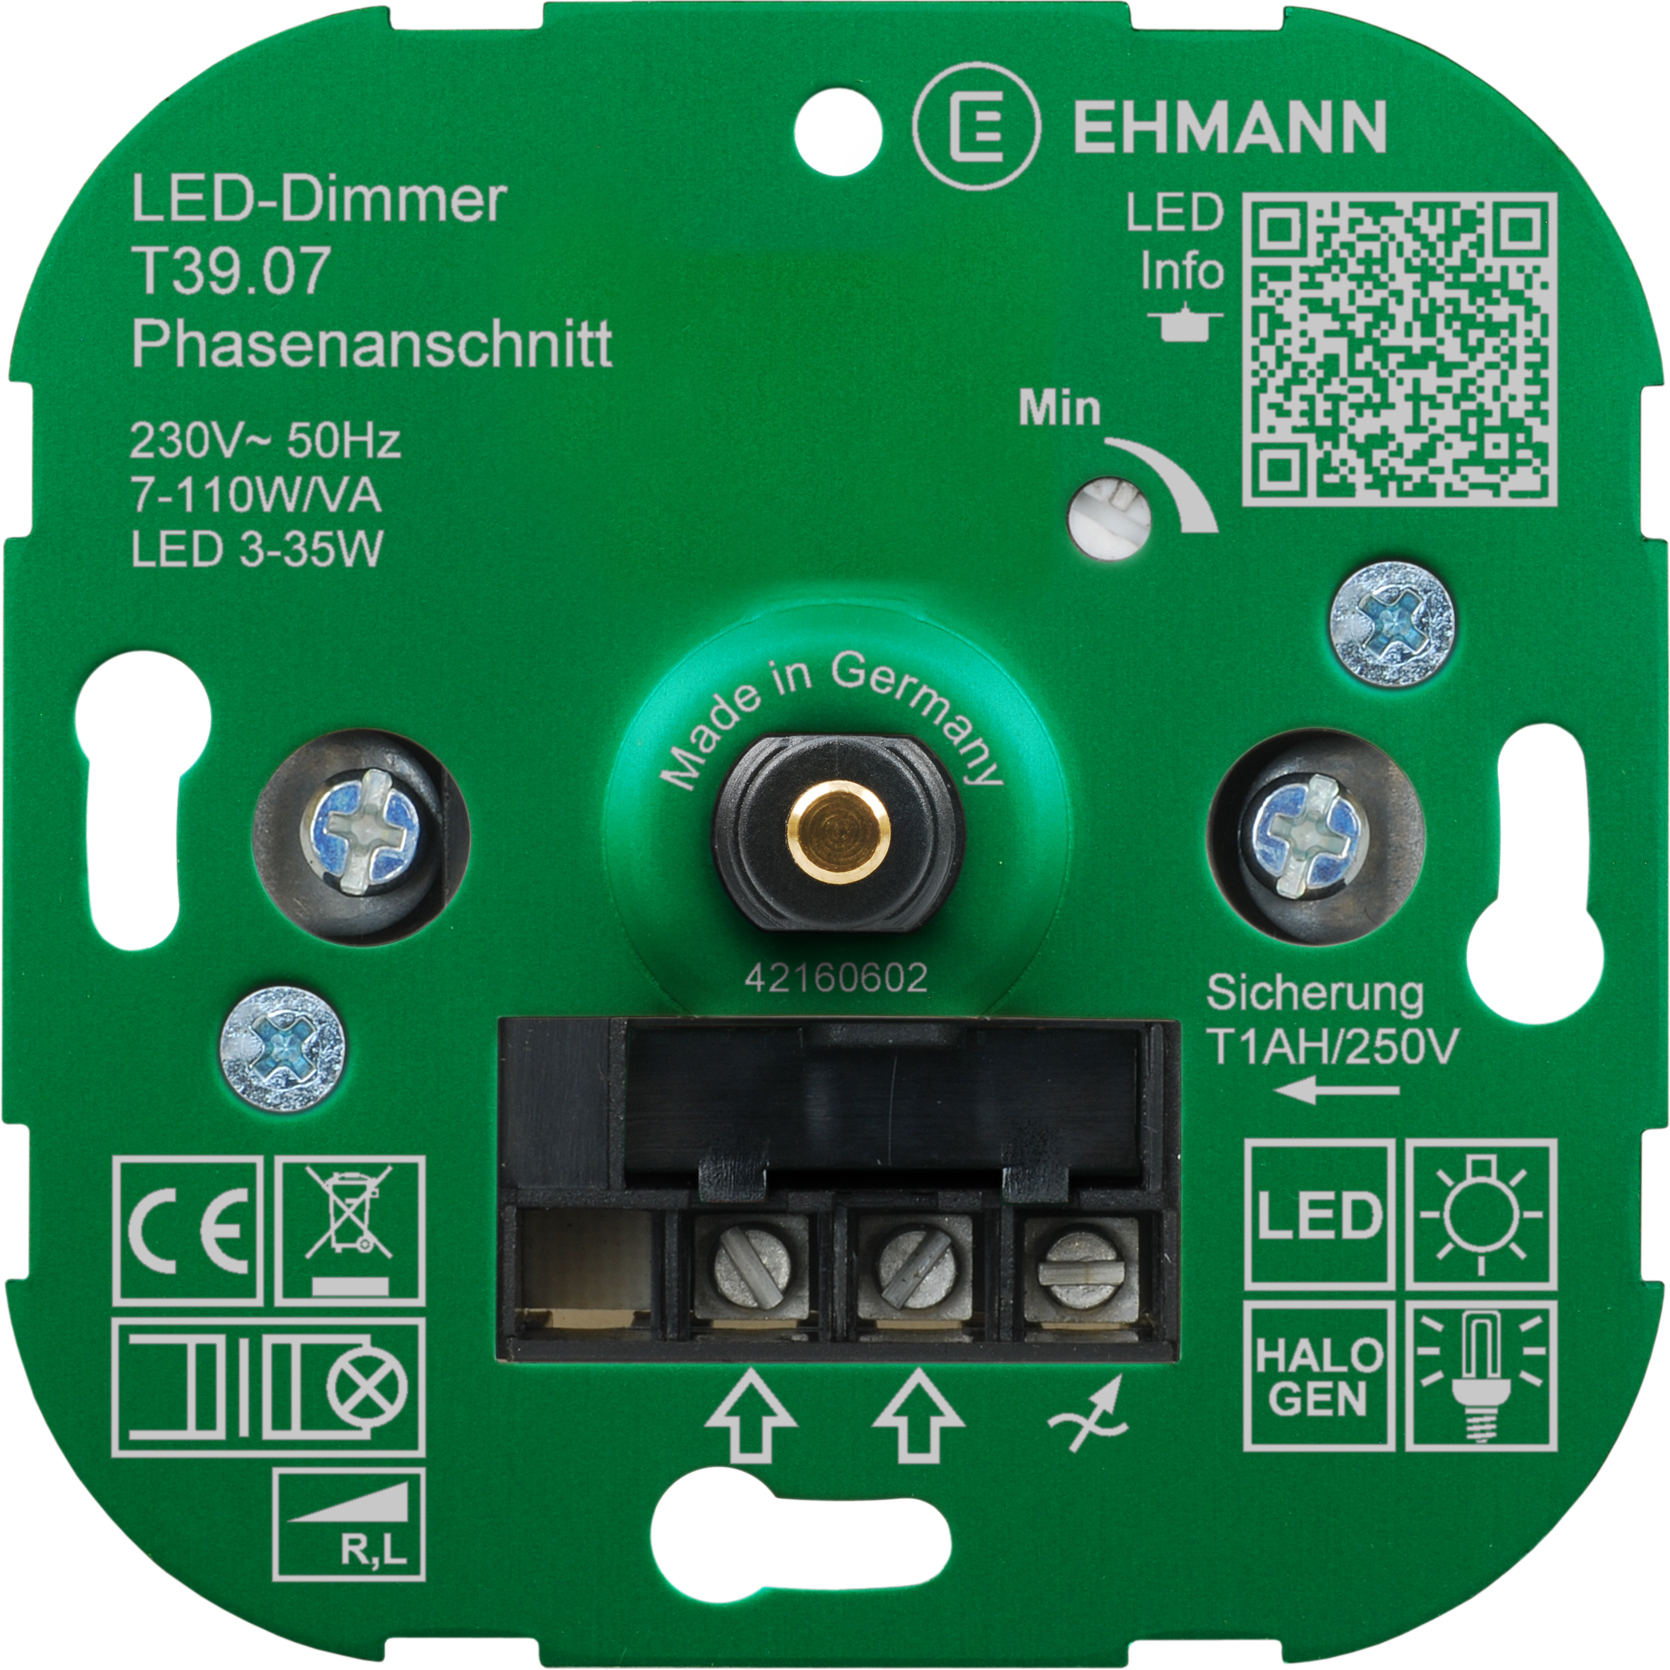 Ehmann LED Unterputz-Dimmer, Phasenanschnitt, 230 V, 50 Hz, Leistung: LED 3-35 W, 7-110 W/VA, inkl. Schalterprogramm-Adapter, Grün